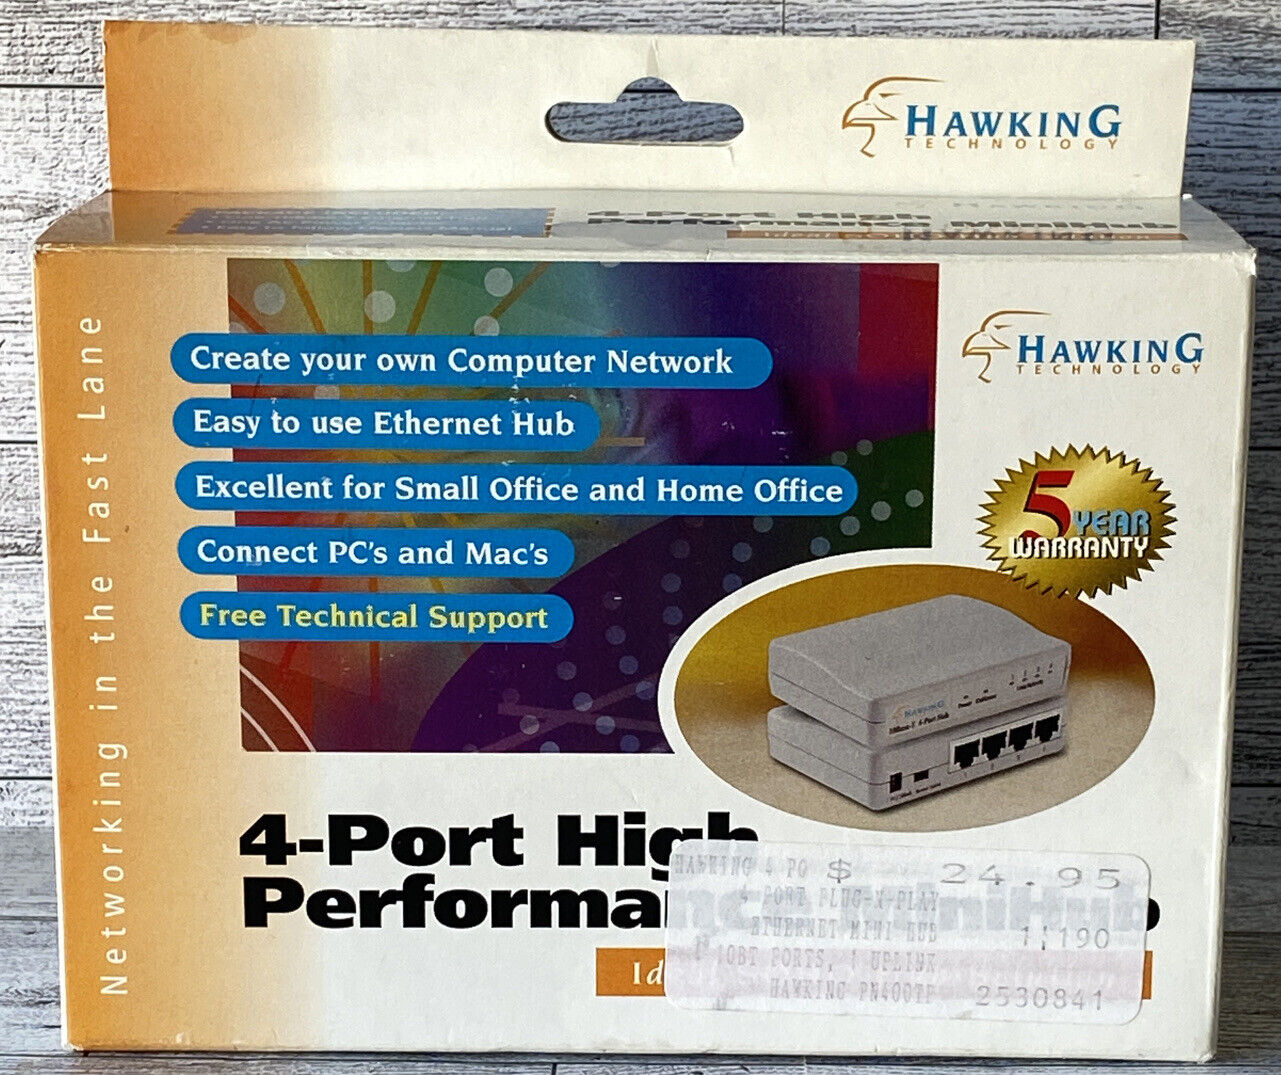 Hawking 4-Port High Performance MiniHub [PN400TP] Complete • New In Box!